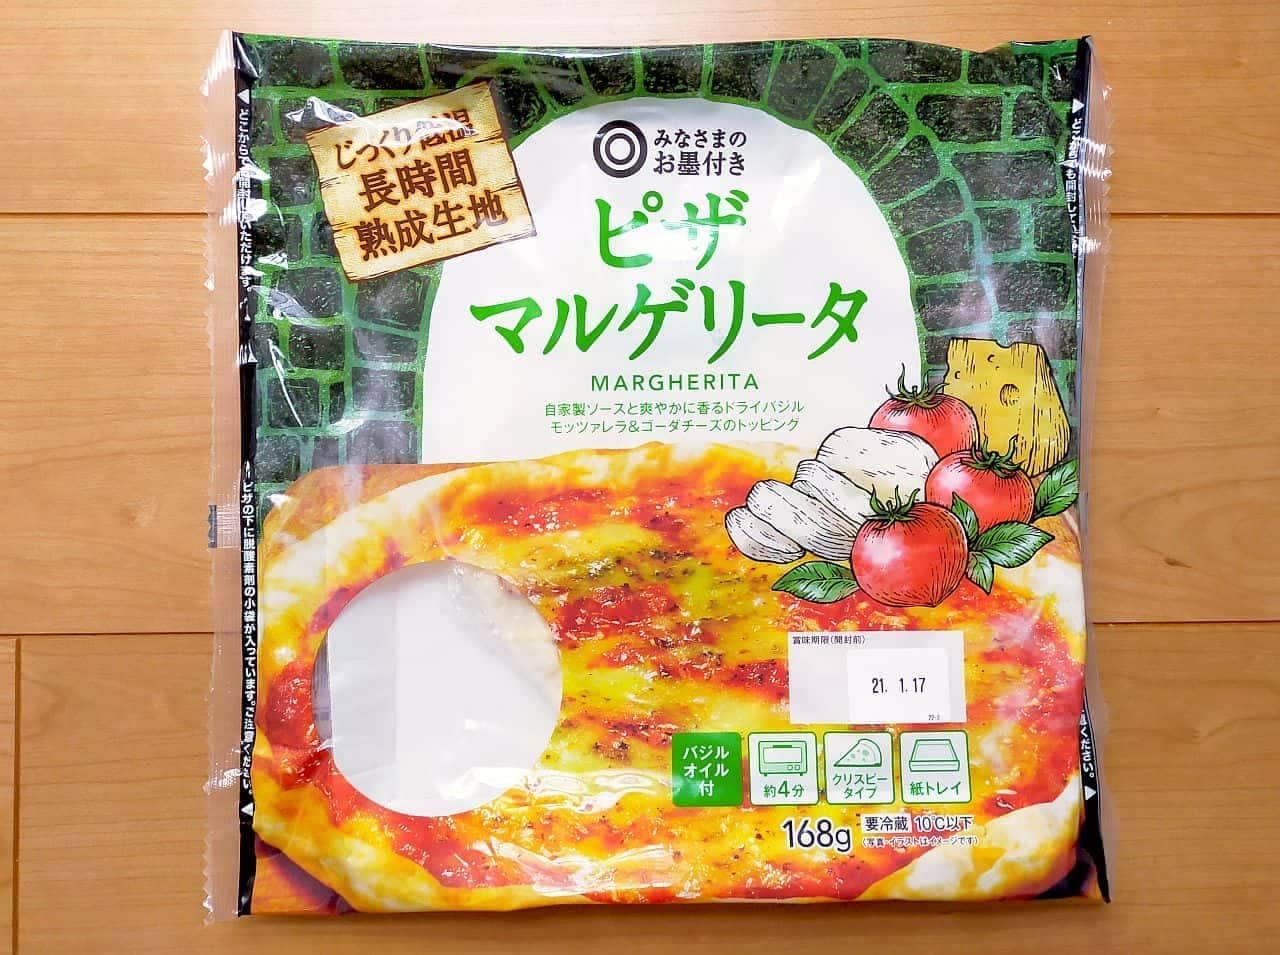 Seiyu "Everyone's endorsement" frozen pizza